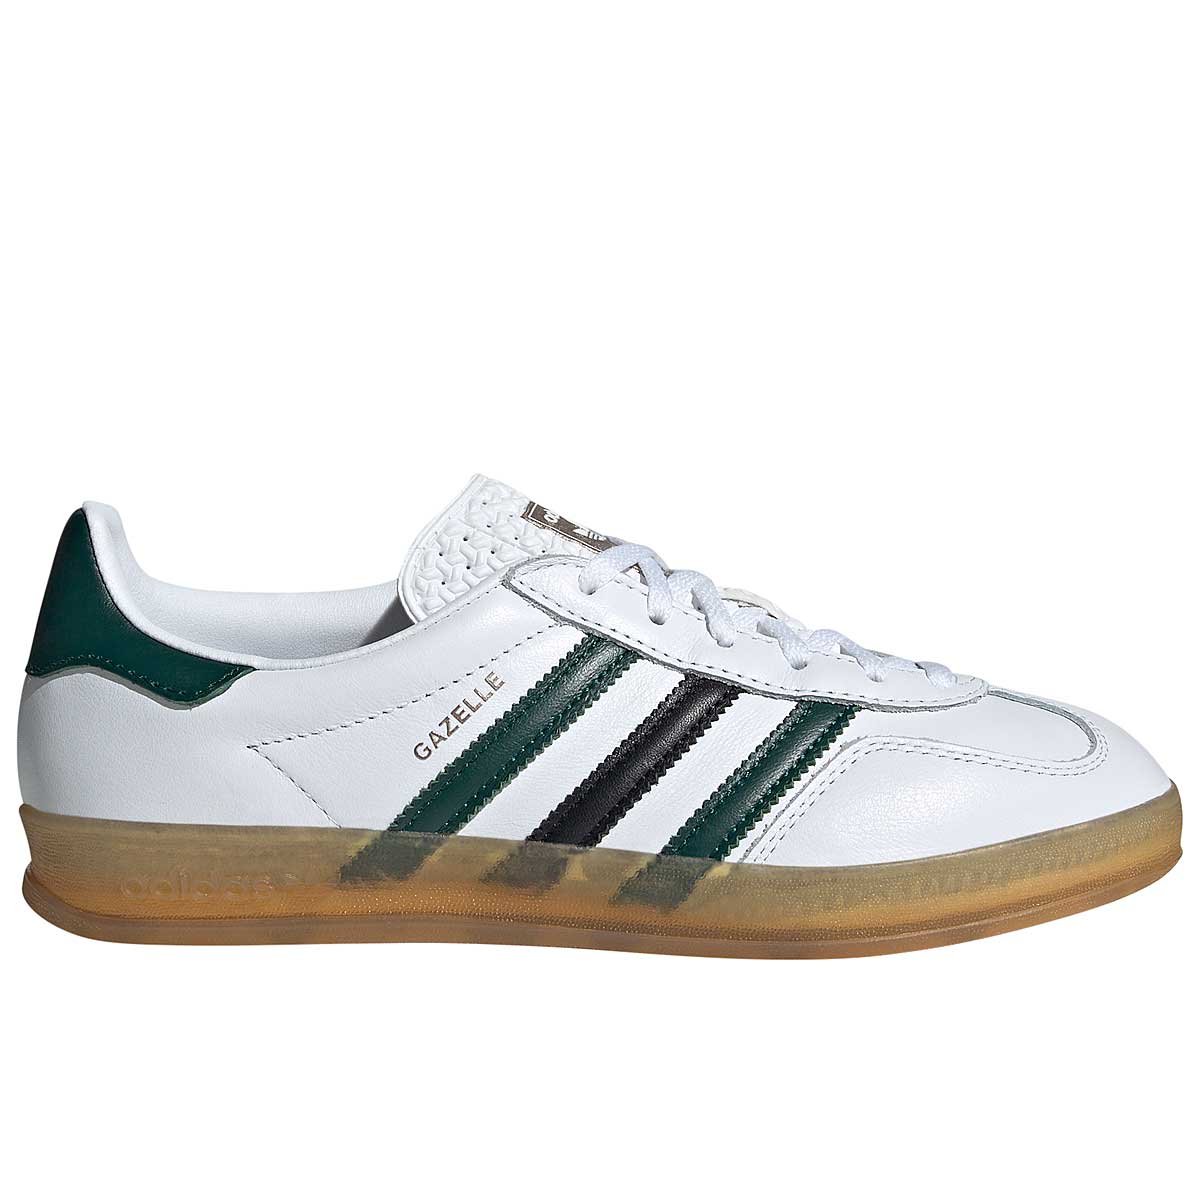 Adidas Gazelle Indoor W, White/green/black EU48